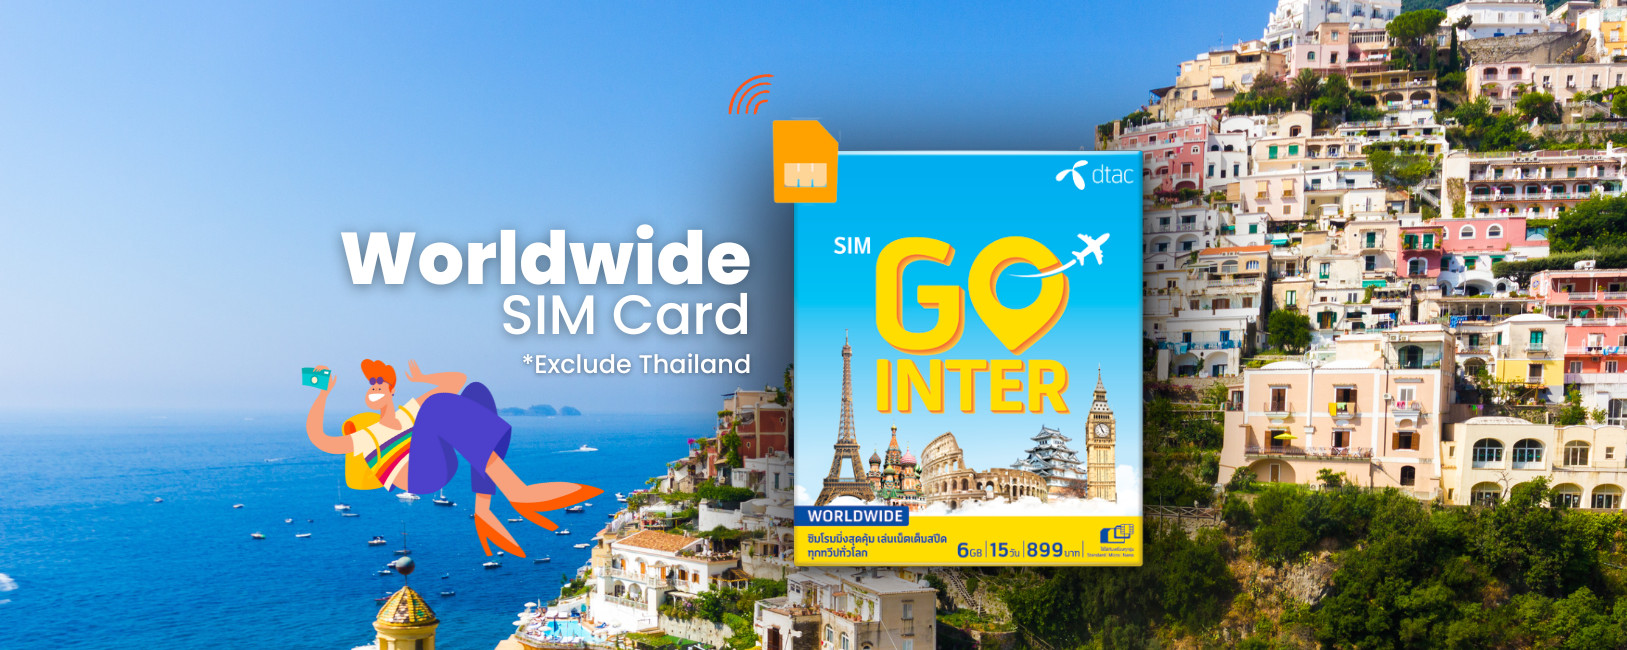 全球通用 Dtac Go INTER 上網 SIM 卡（泰國領取）